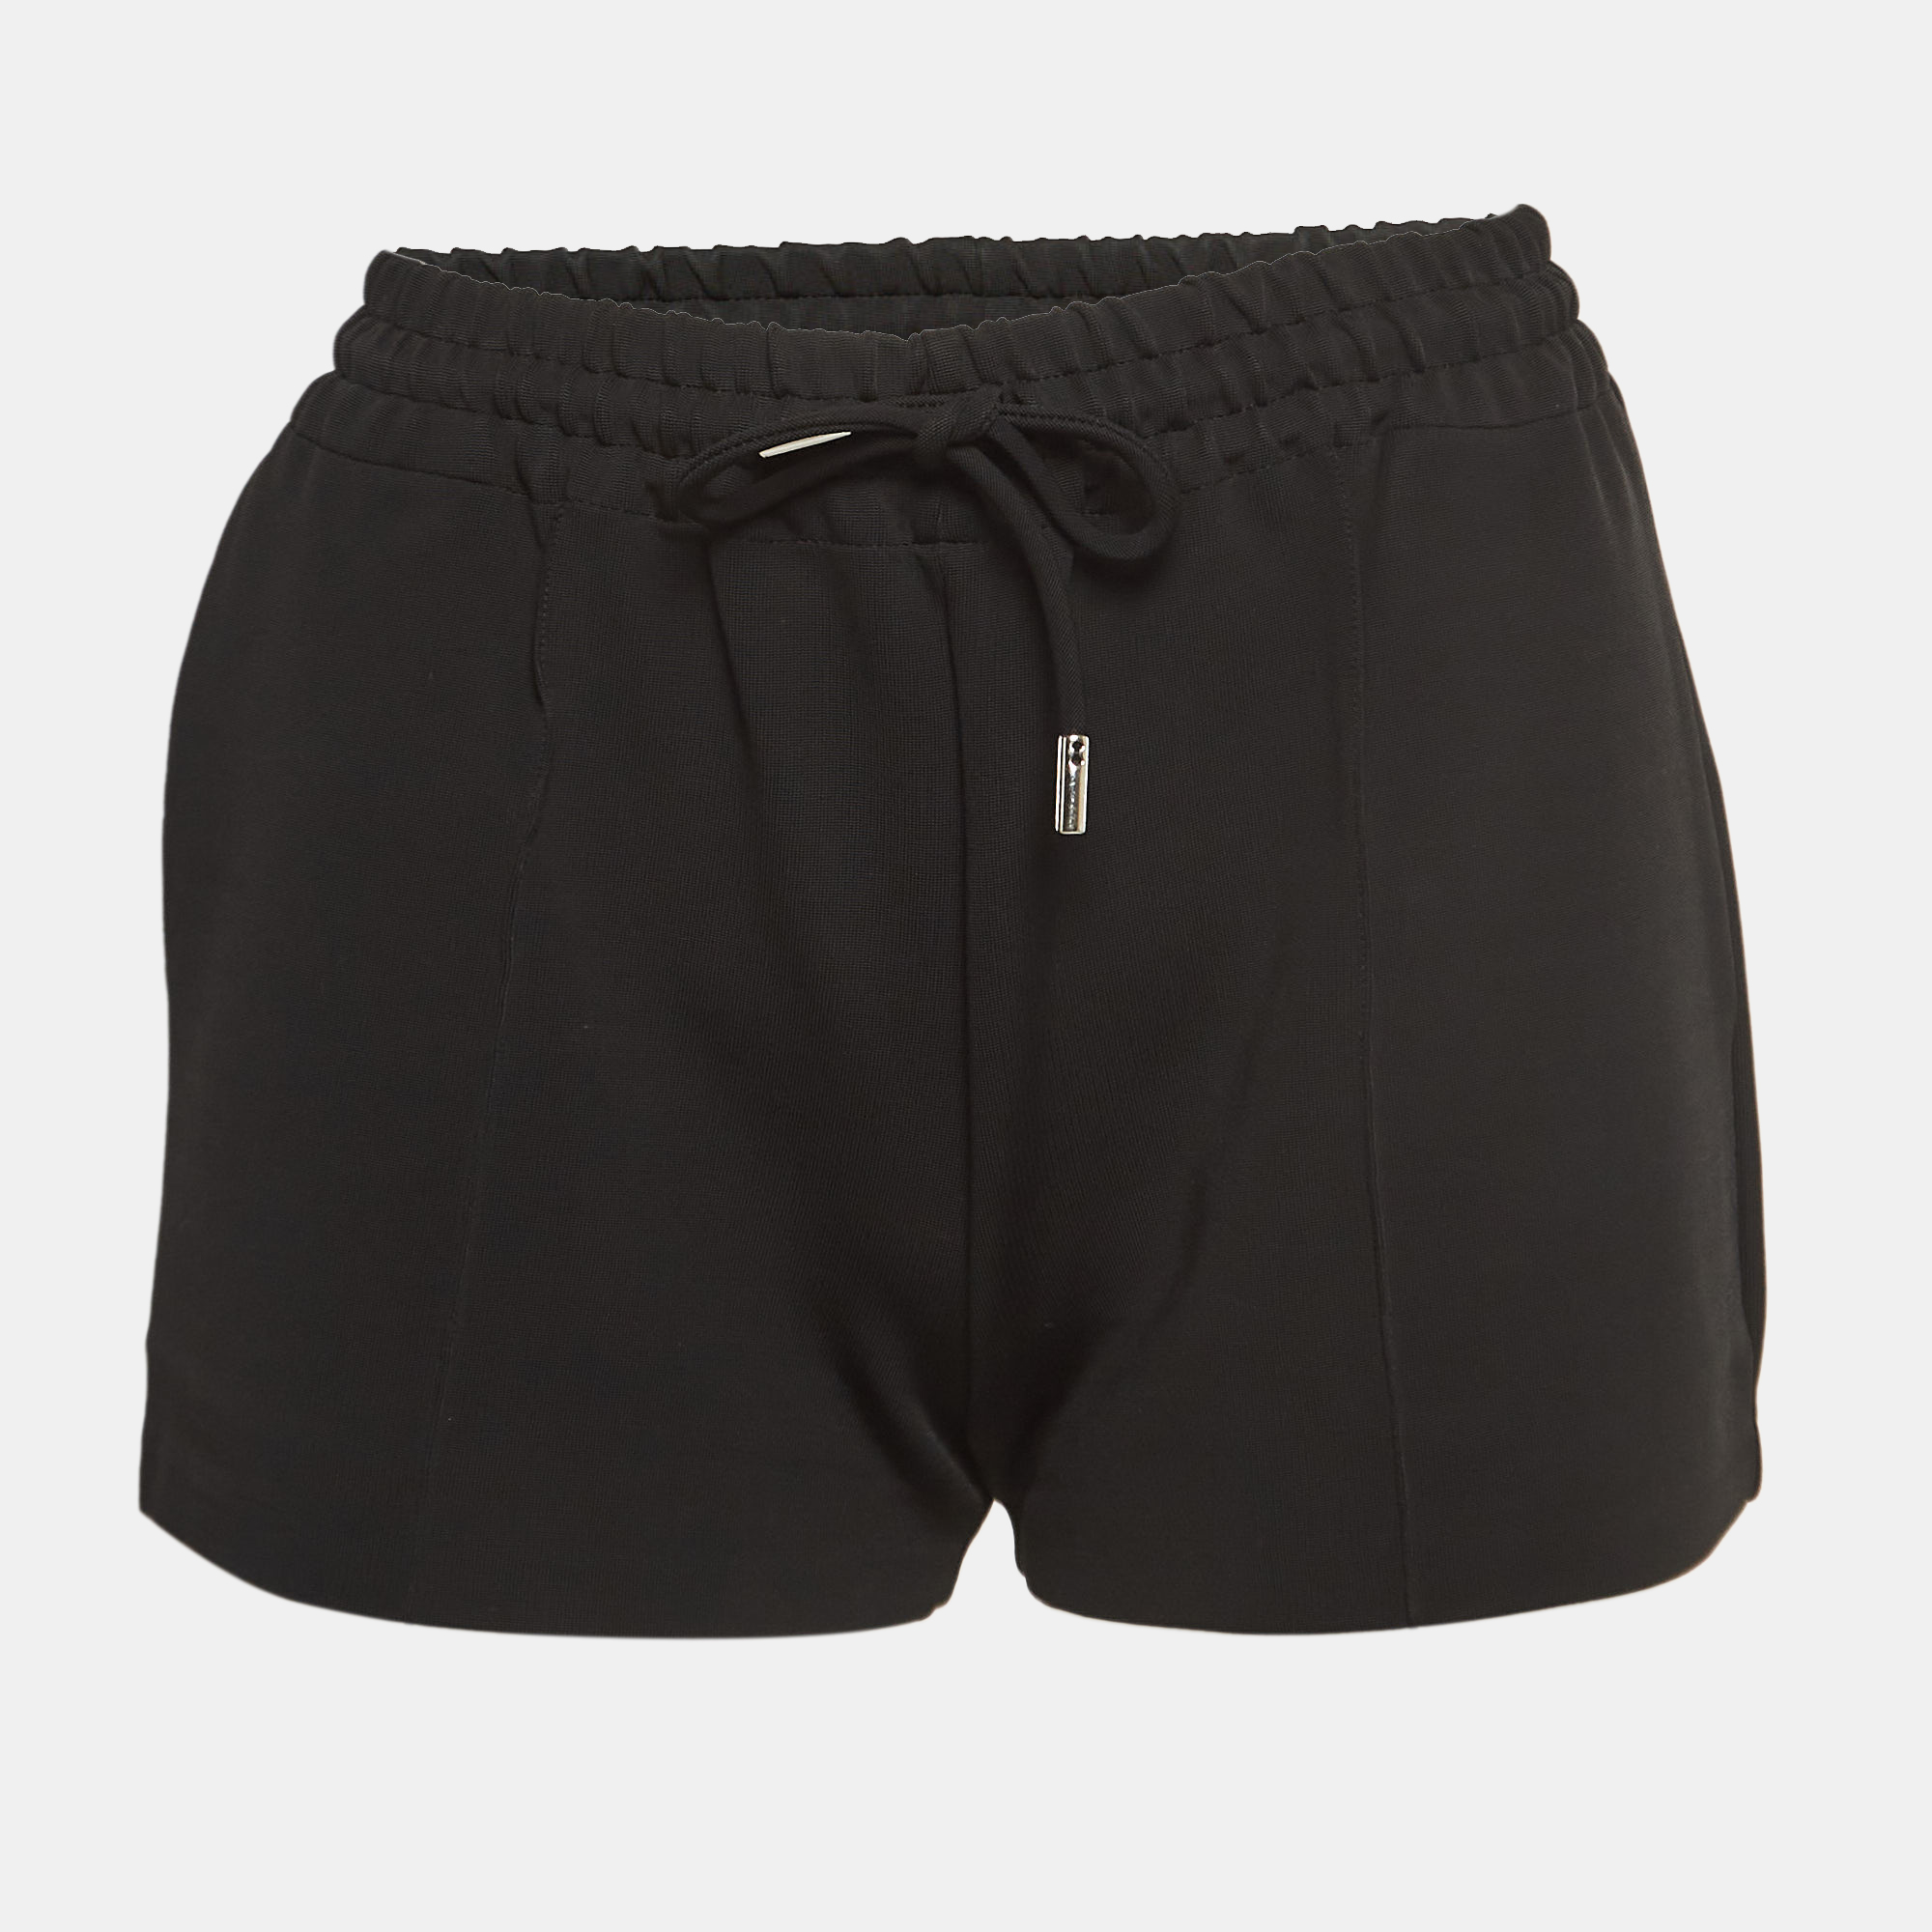 Givenchy black stretch crepe shorts xs